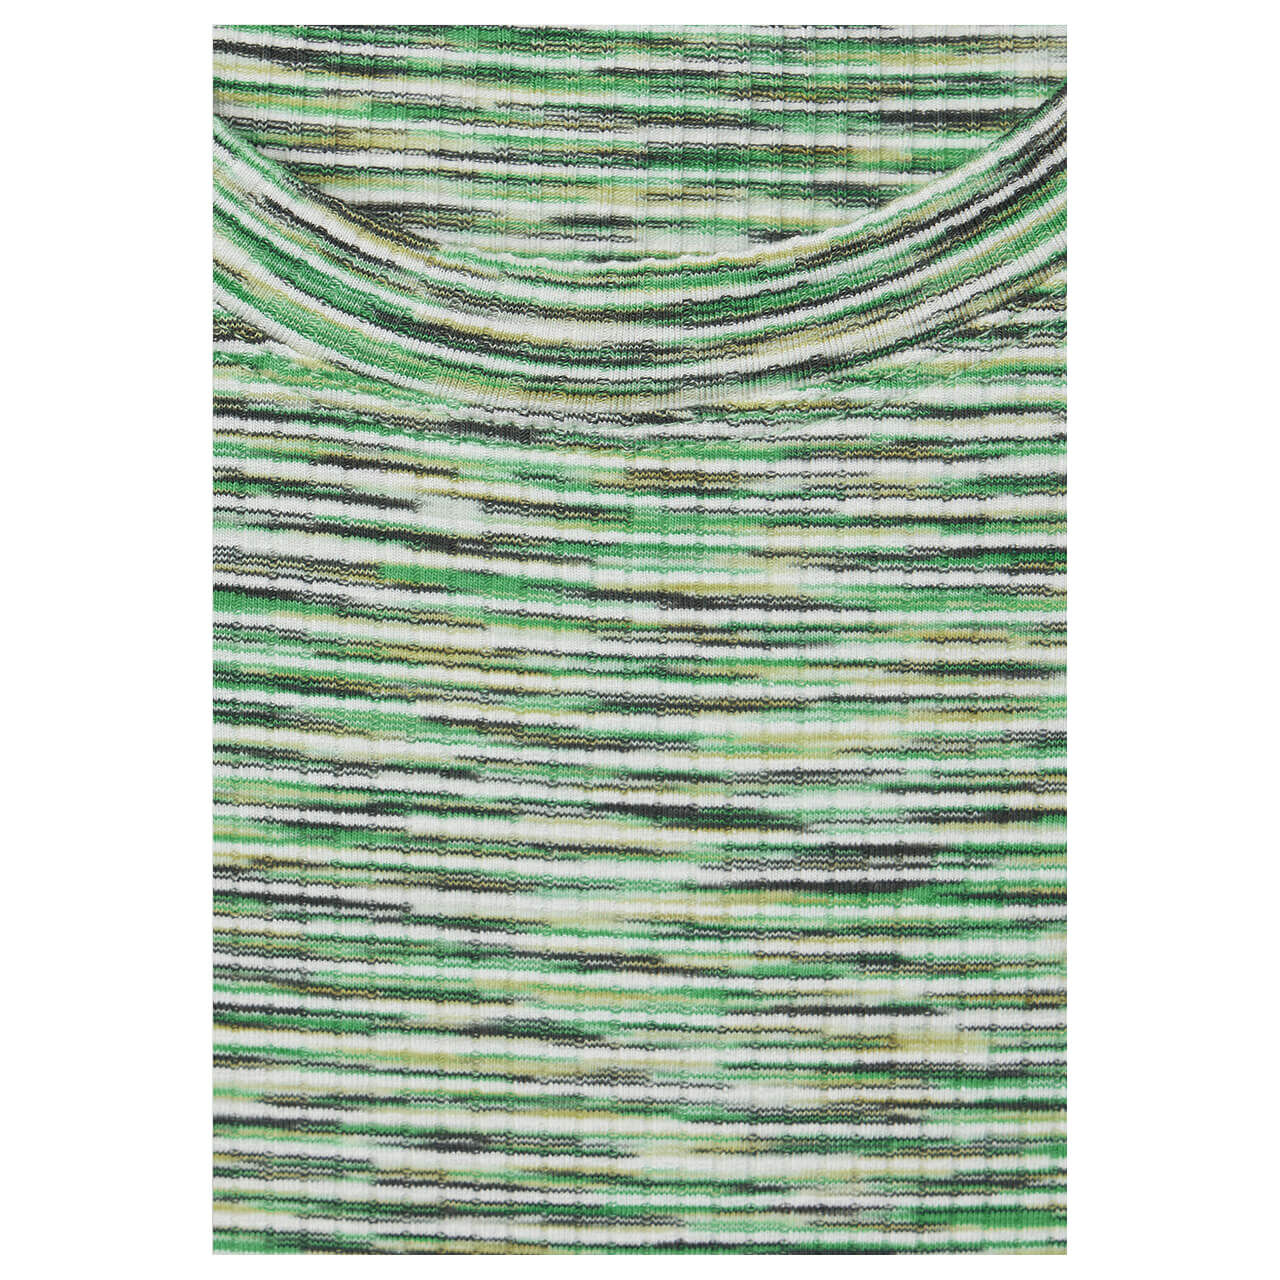 Cecil Damen 3/4 Arm Shirt Multi Melange Stripe green